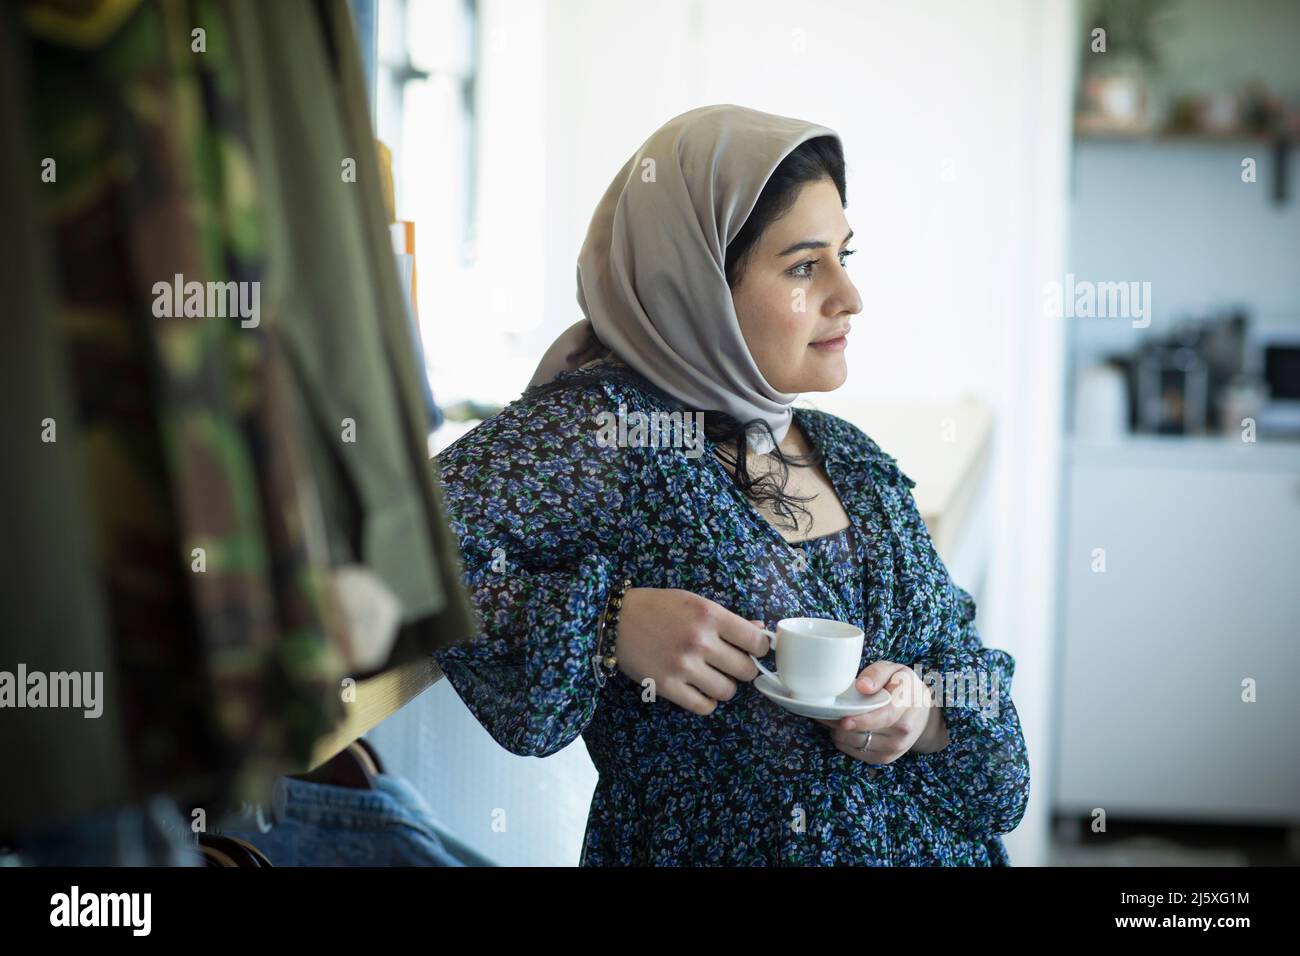 Thoughtful young Muslim woman in hijab drinking coffee Stock Photo